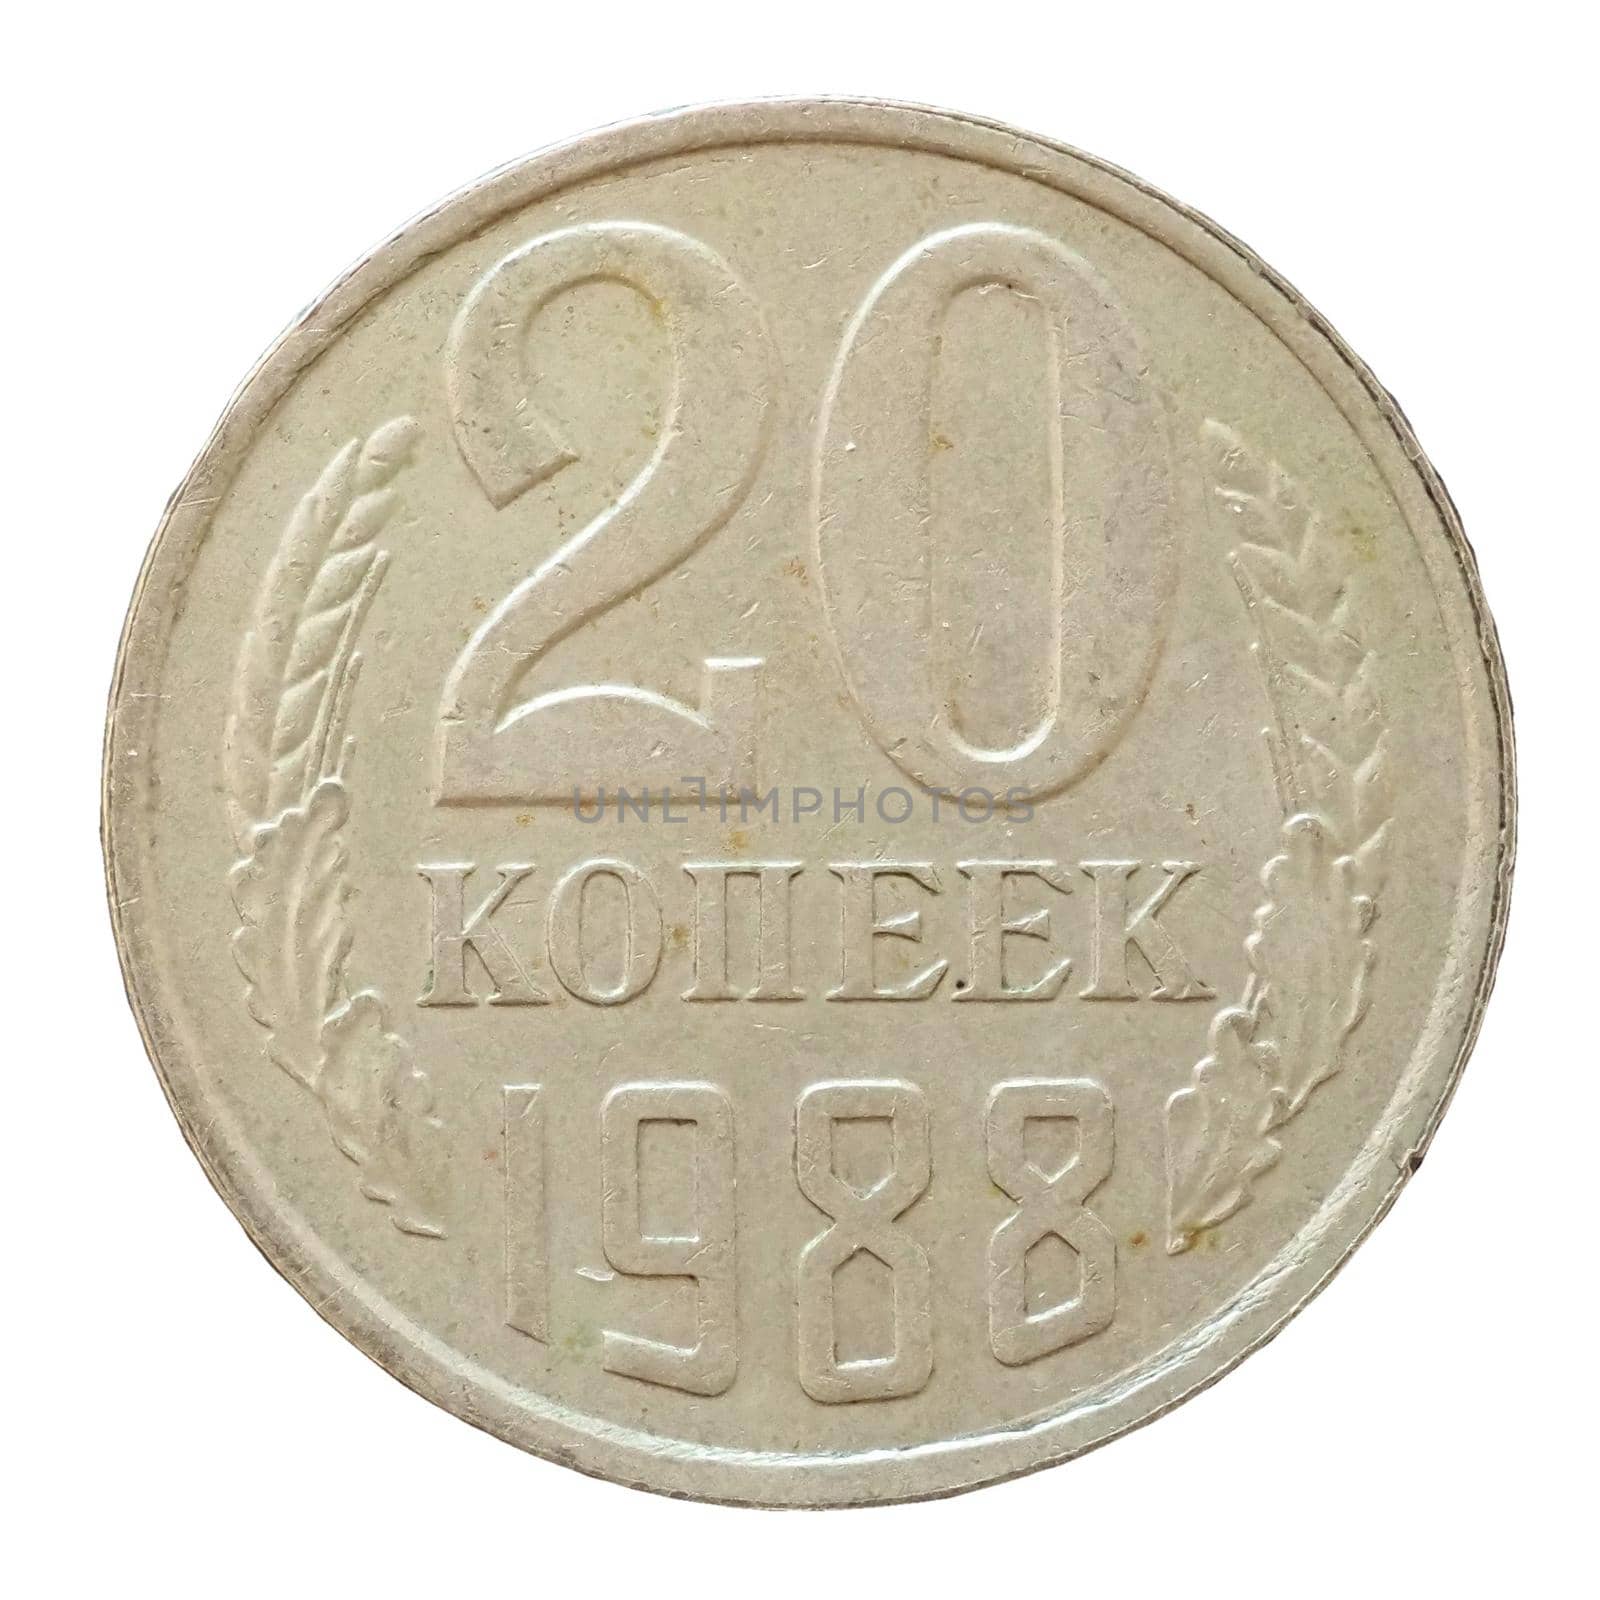 20 Ruble cents coin, Russia by claudiodivizia